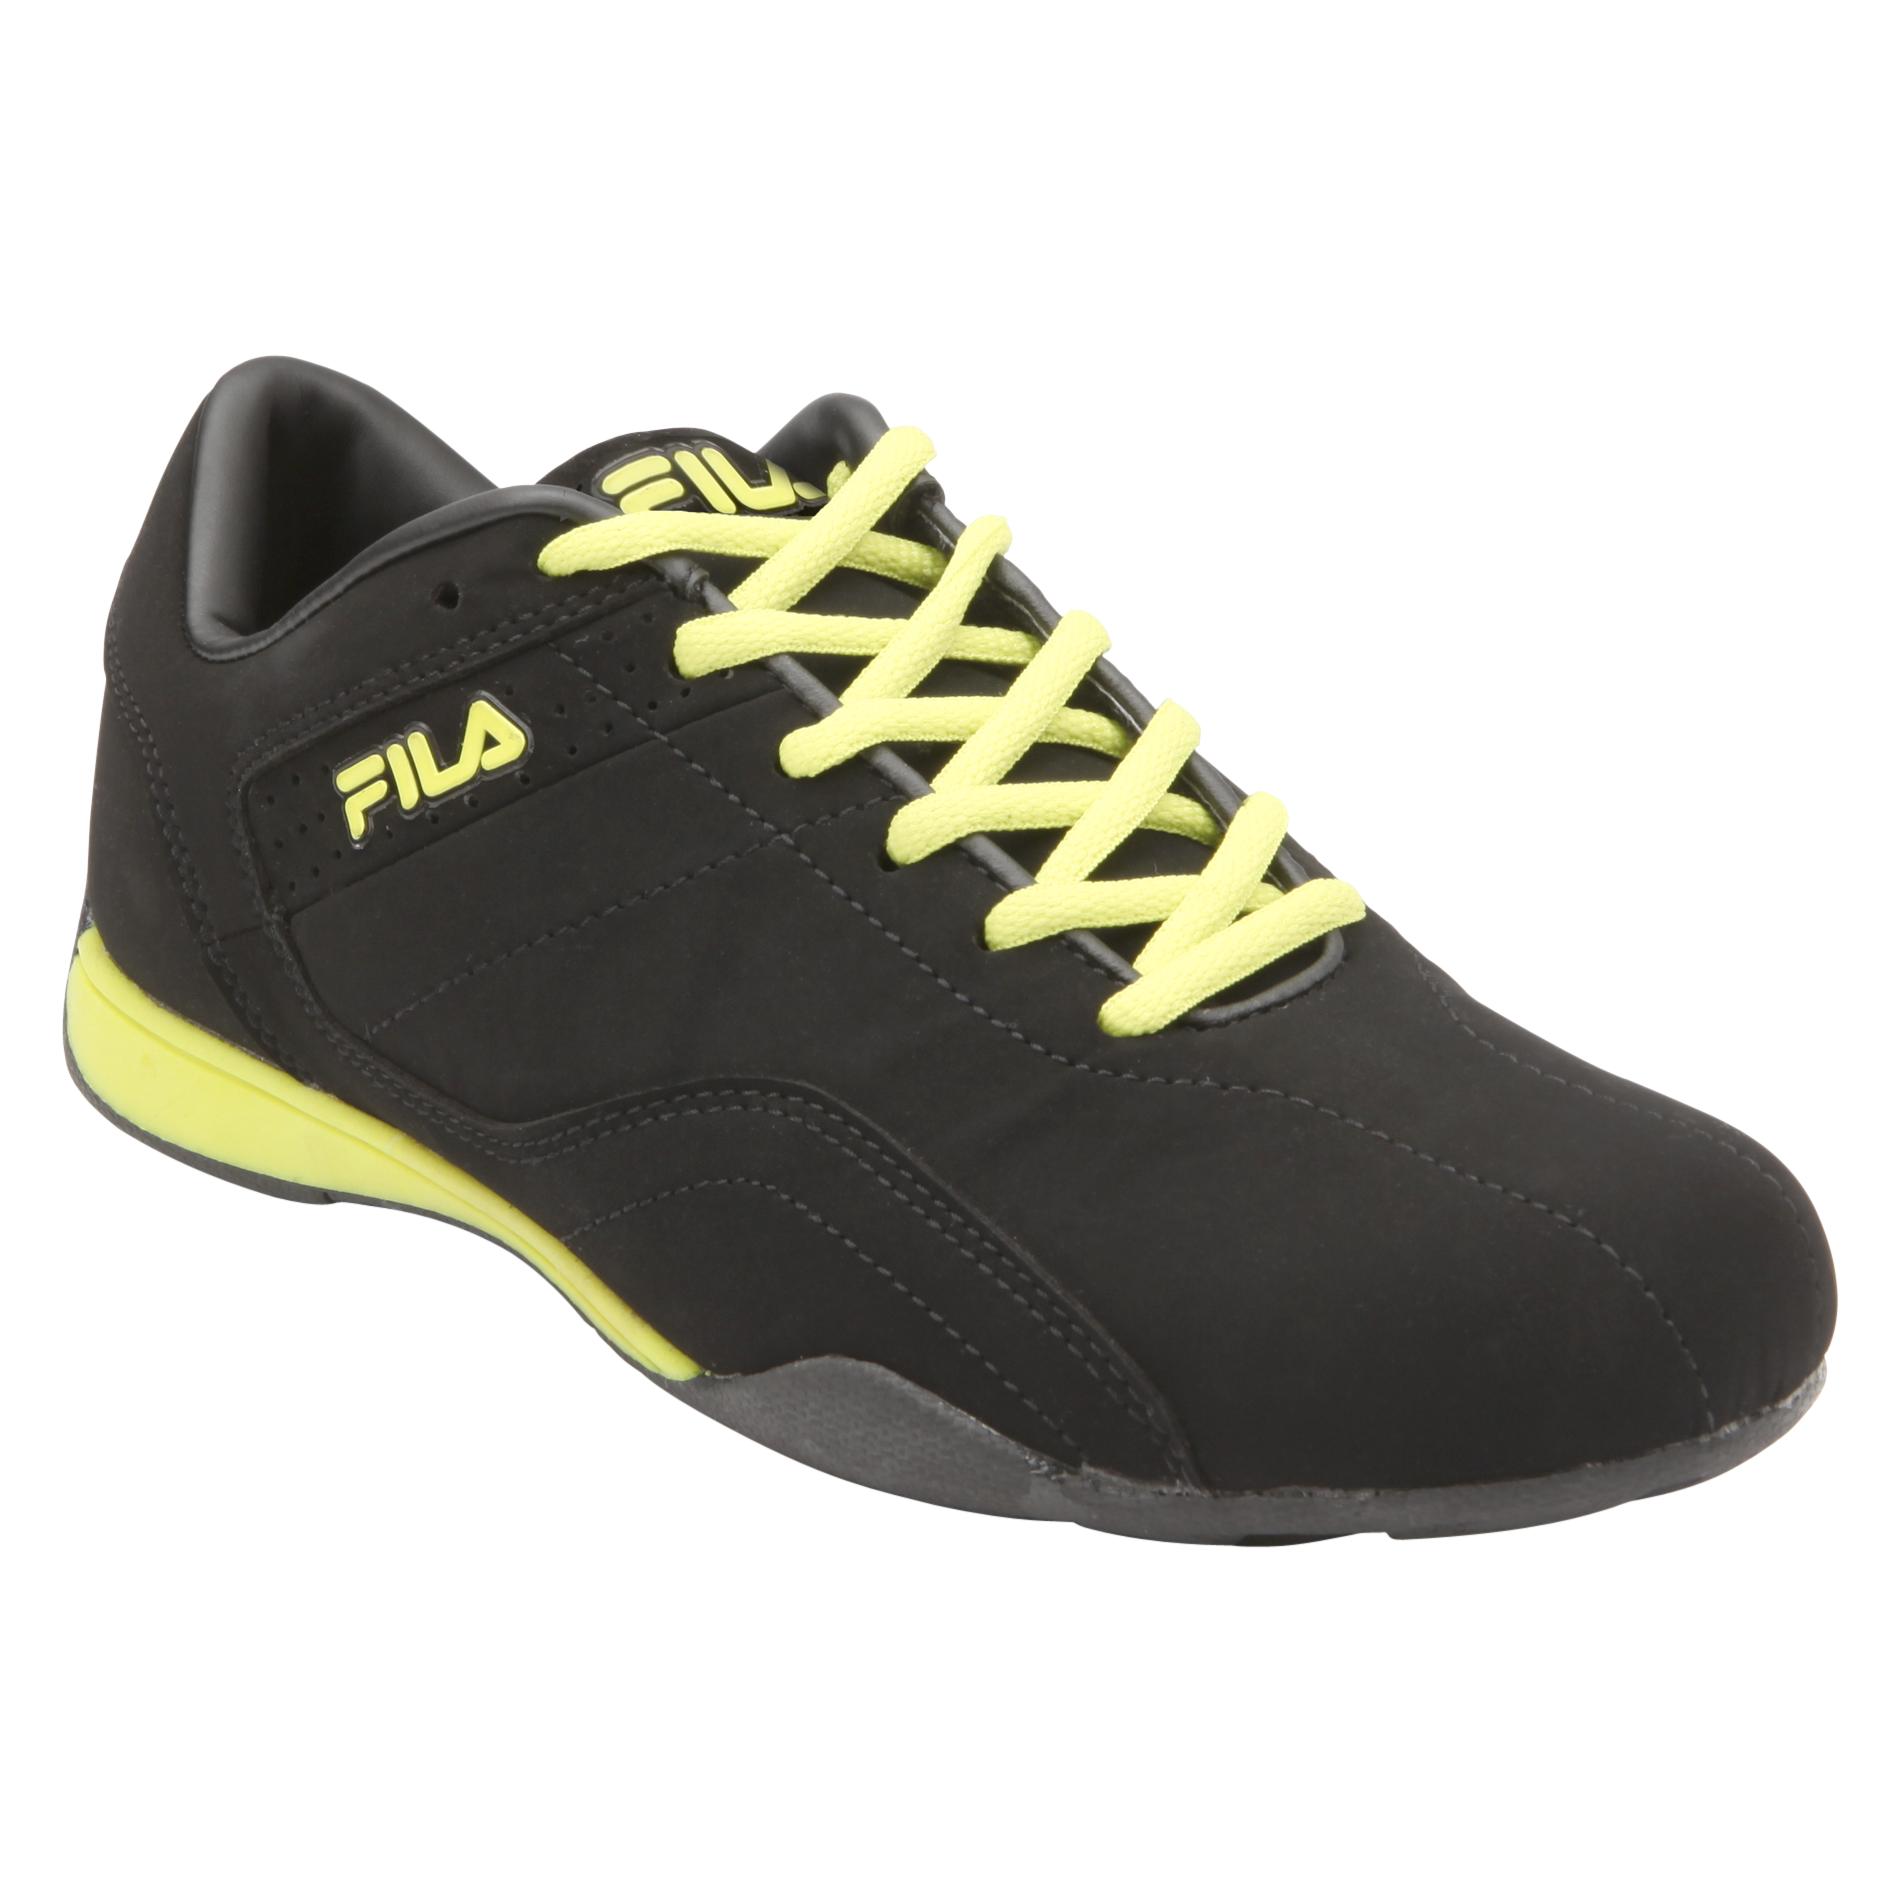 Fila Women's Athletic Shoe Exalade - Black/Neon Green